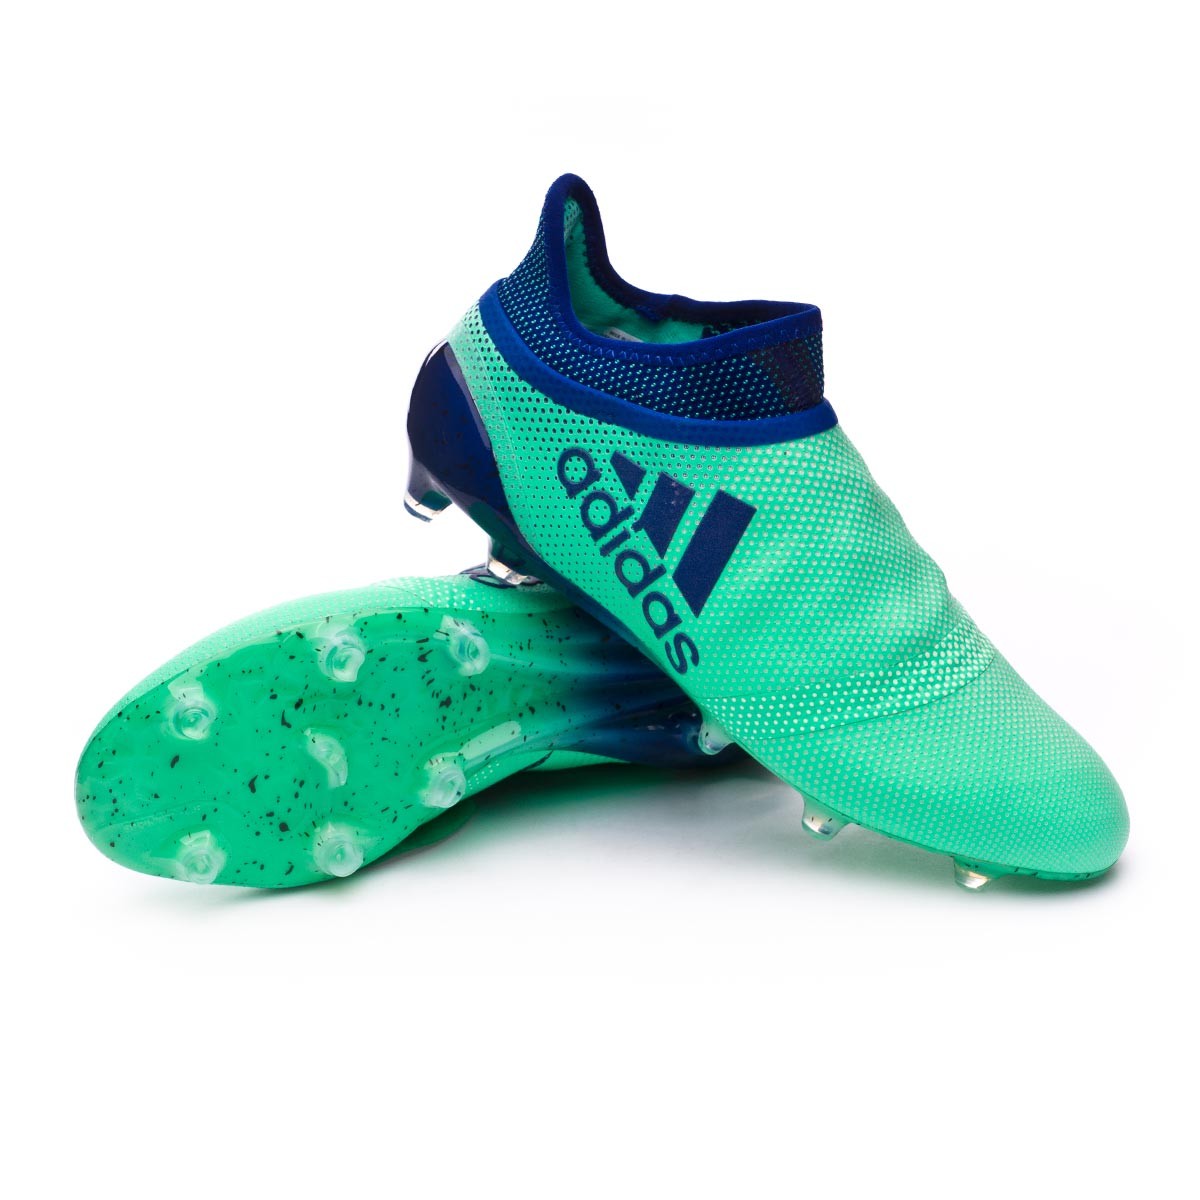 Football Boots adidas X 17+ Purespeed FG Aero green-Unity ink-Hi-res green  - Football store Fútbol Emotion